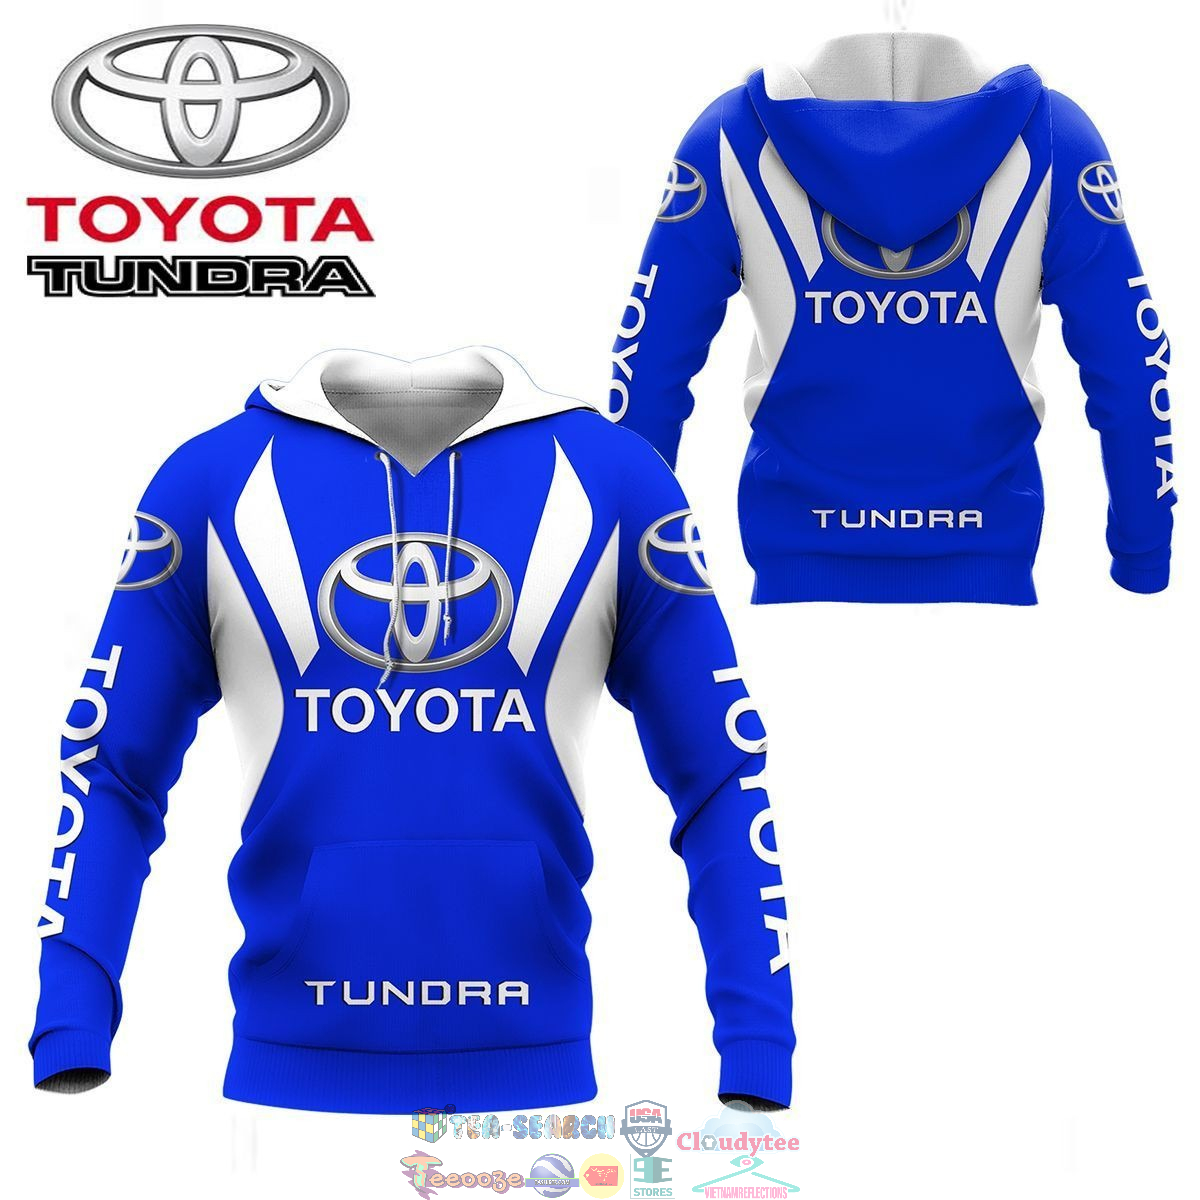 Toyota Tundra ver 13 3D hoodie and t-shirt – Saleoff